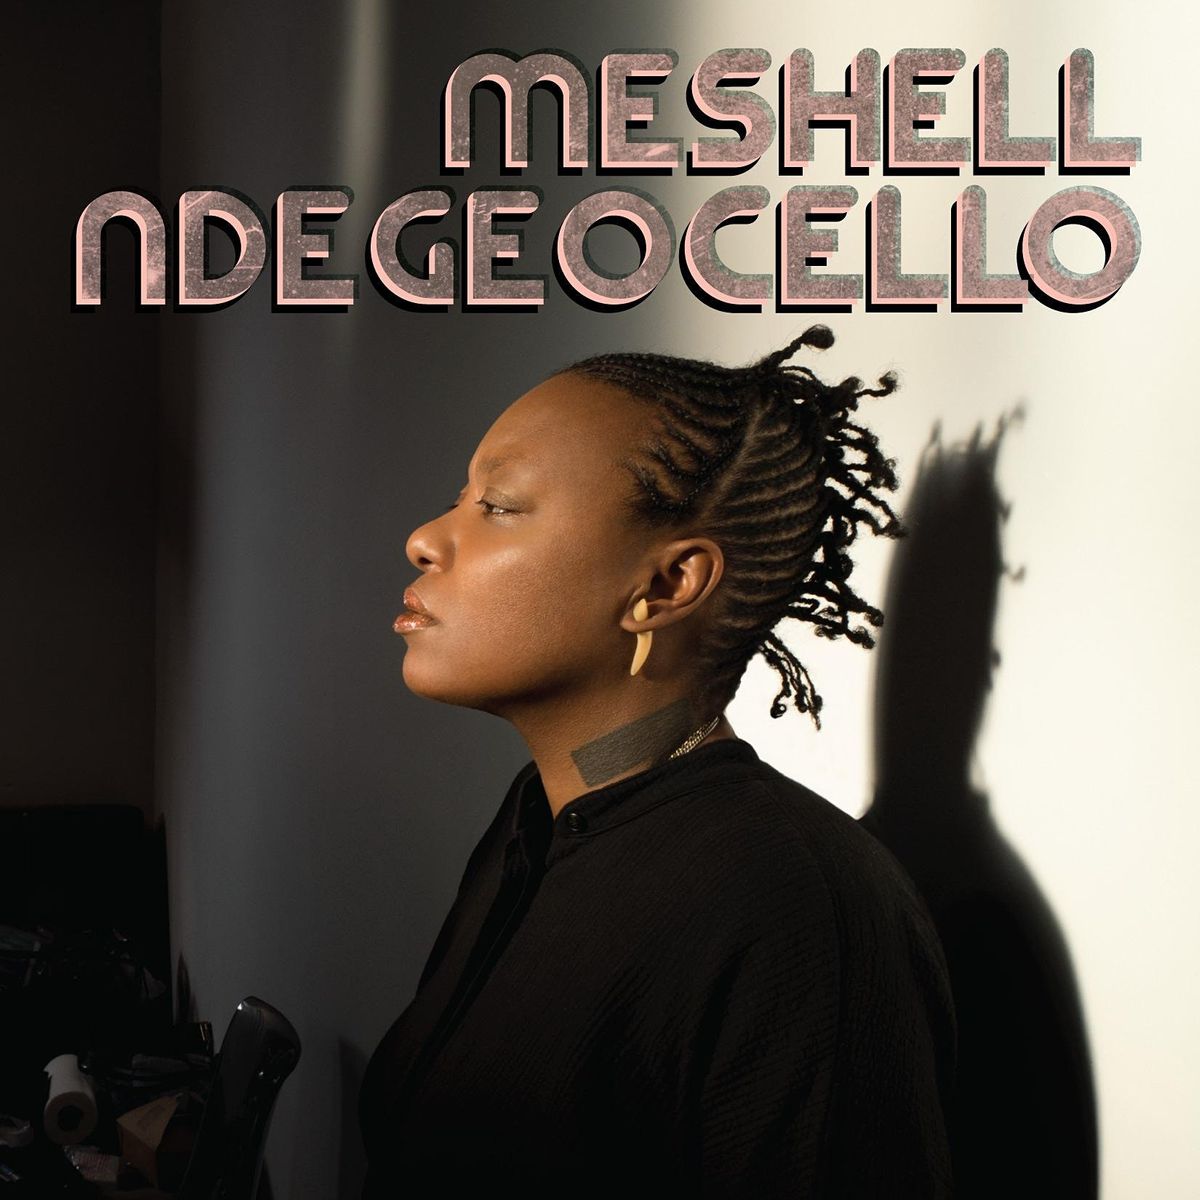 MESHELL NDEGEOCELLO